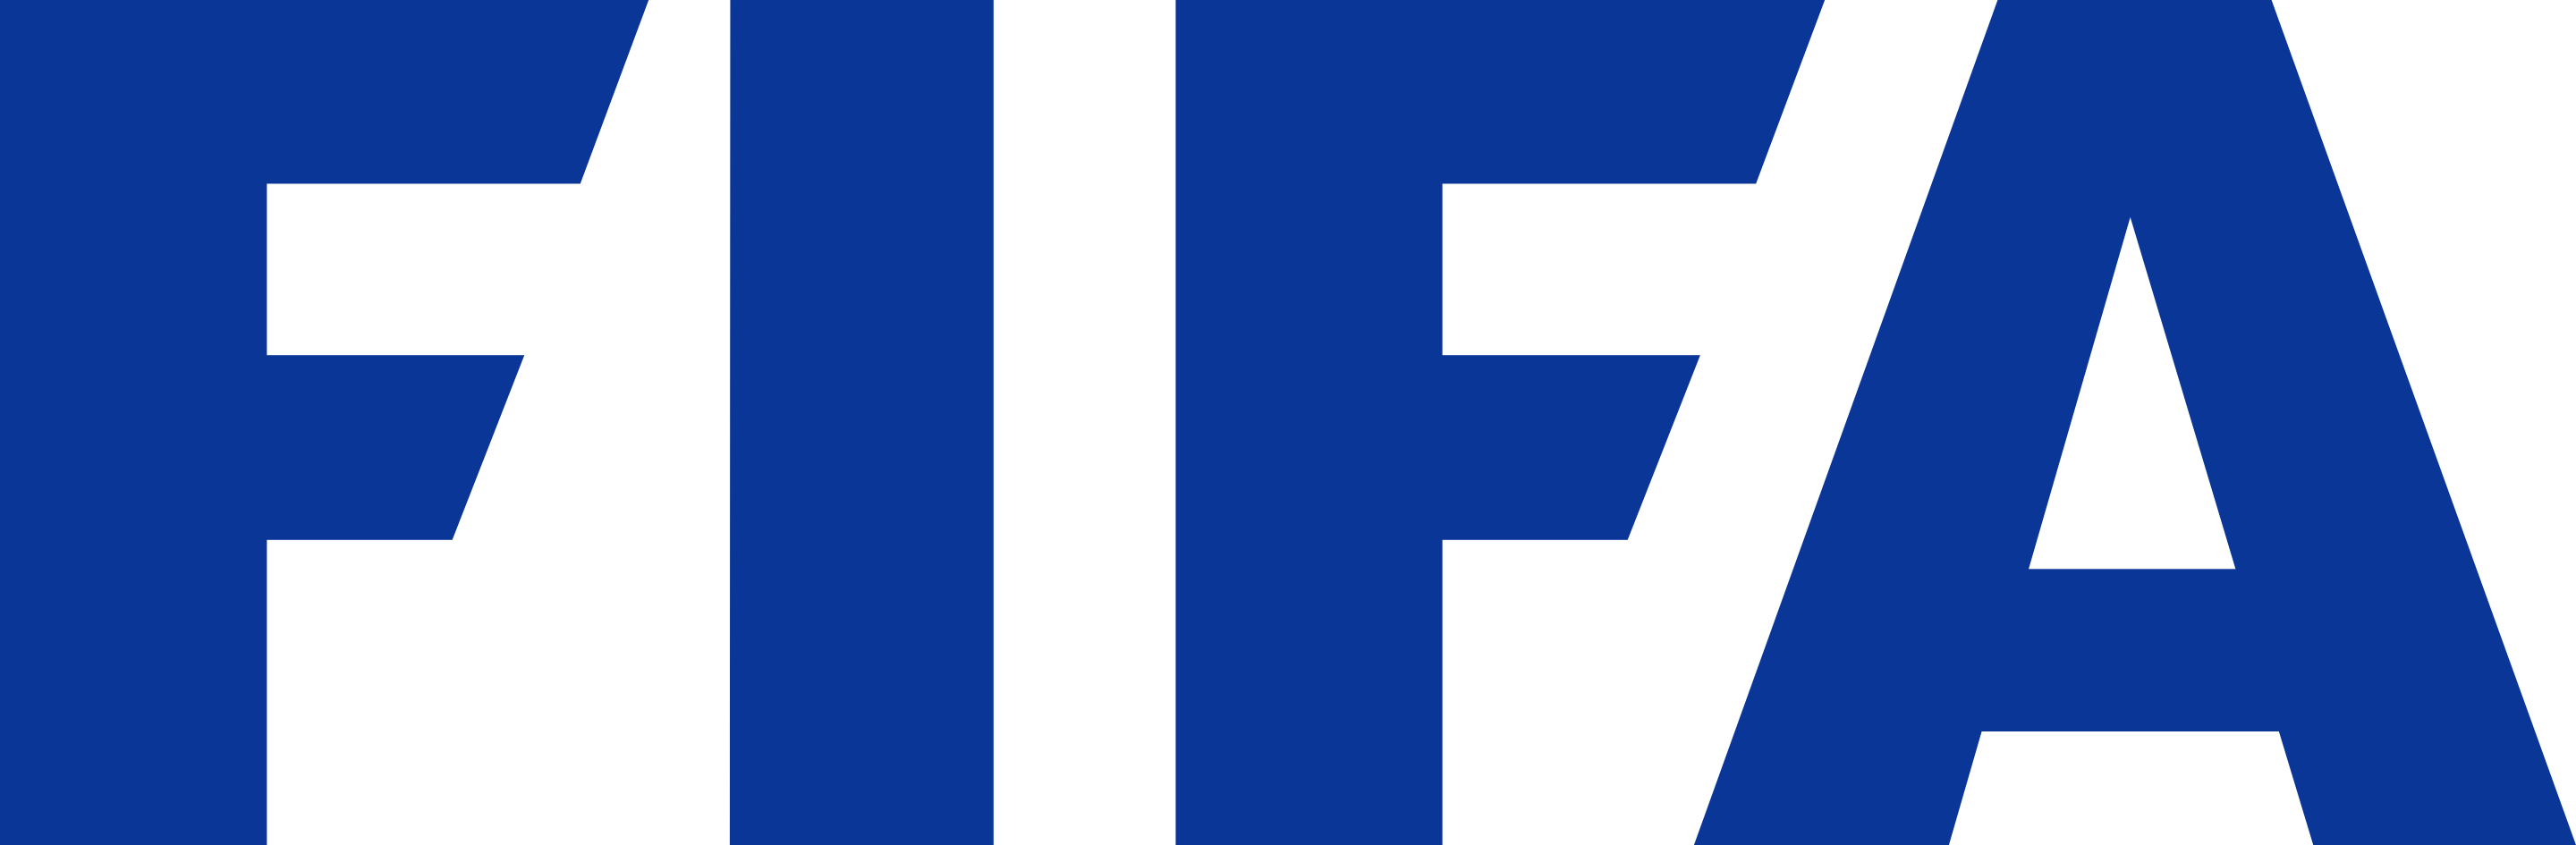 FIFA - Fédération Internationale de Football Association - ФИФА - Международная федерация футбола